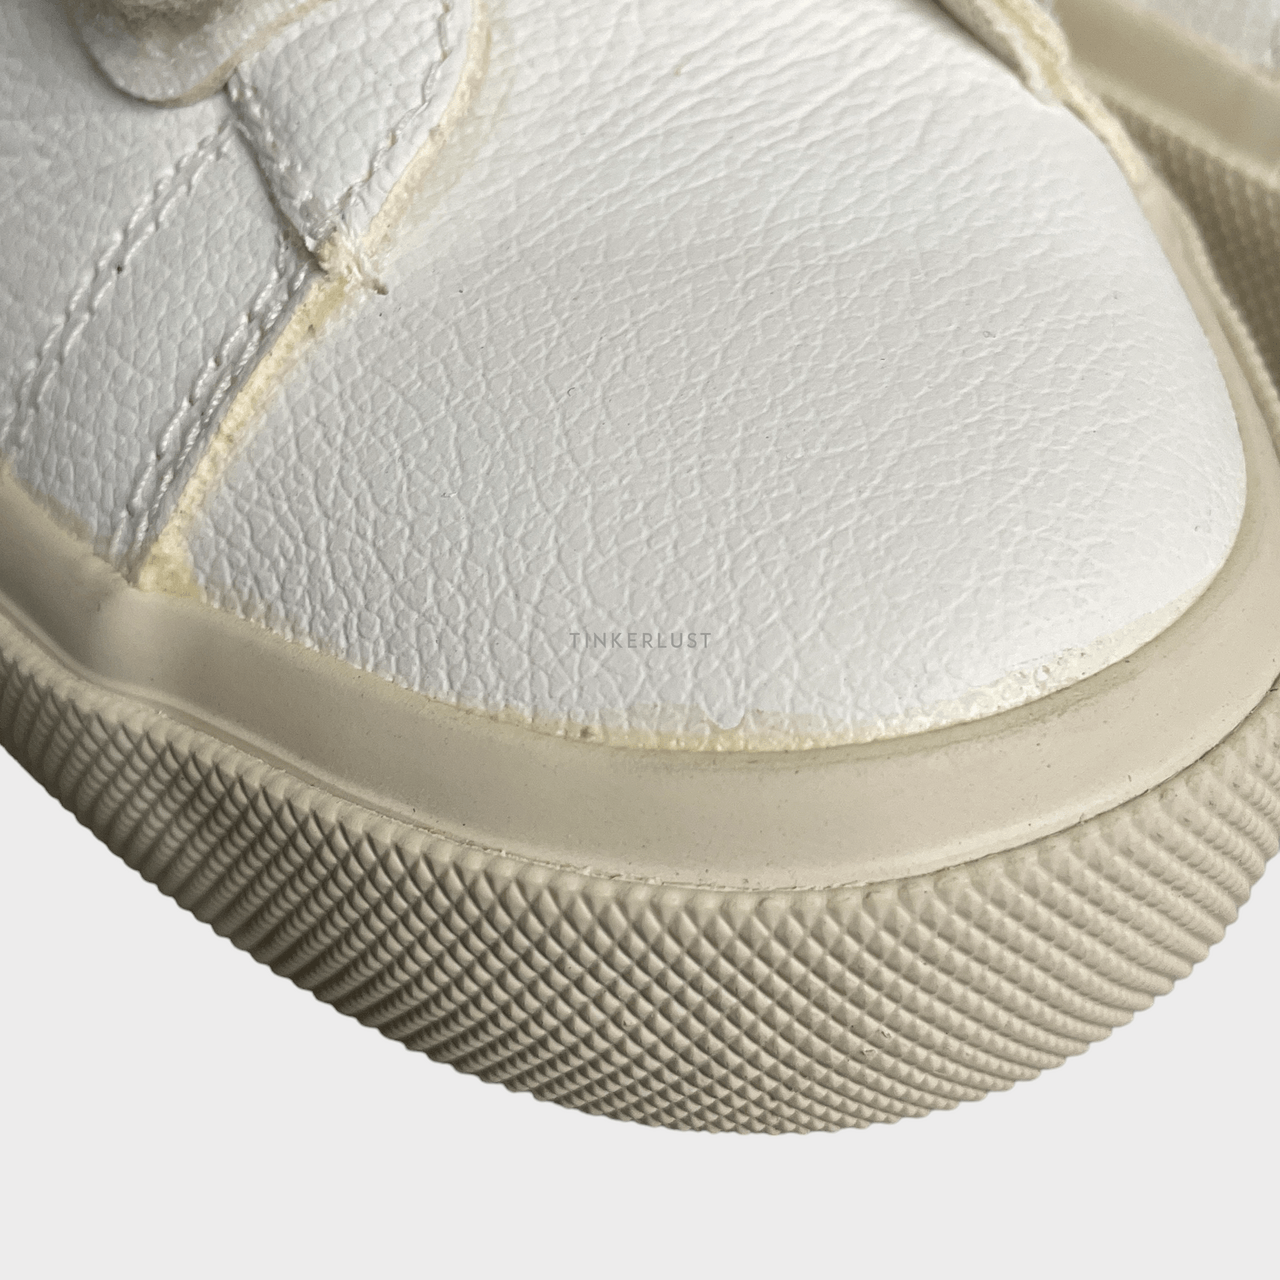 Veja Beige & White Sneakers